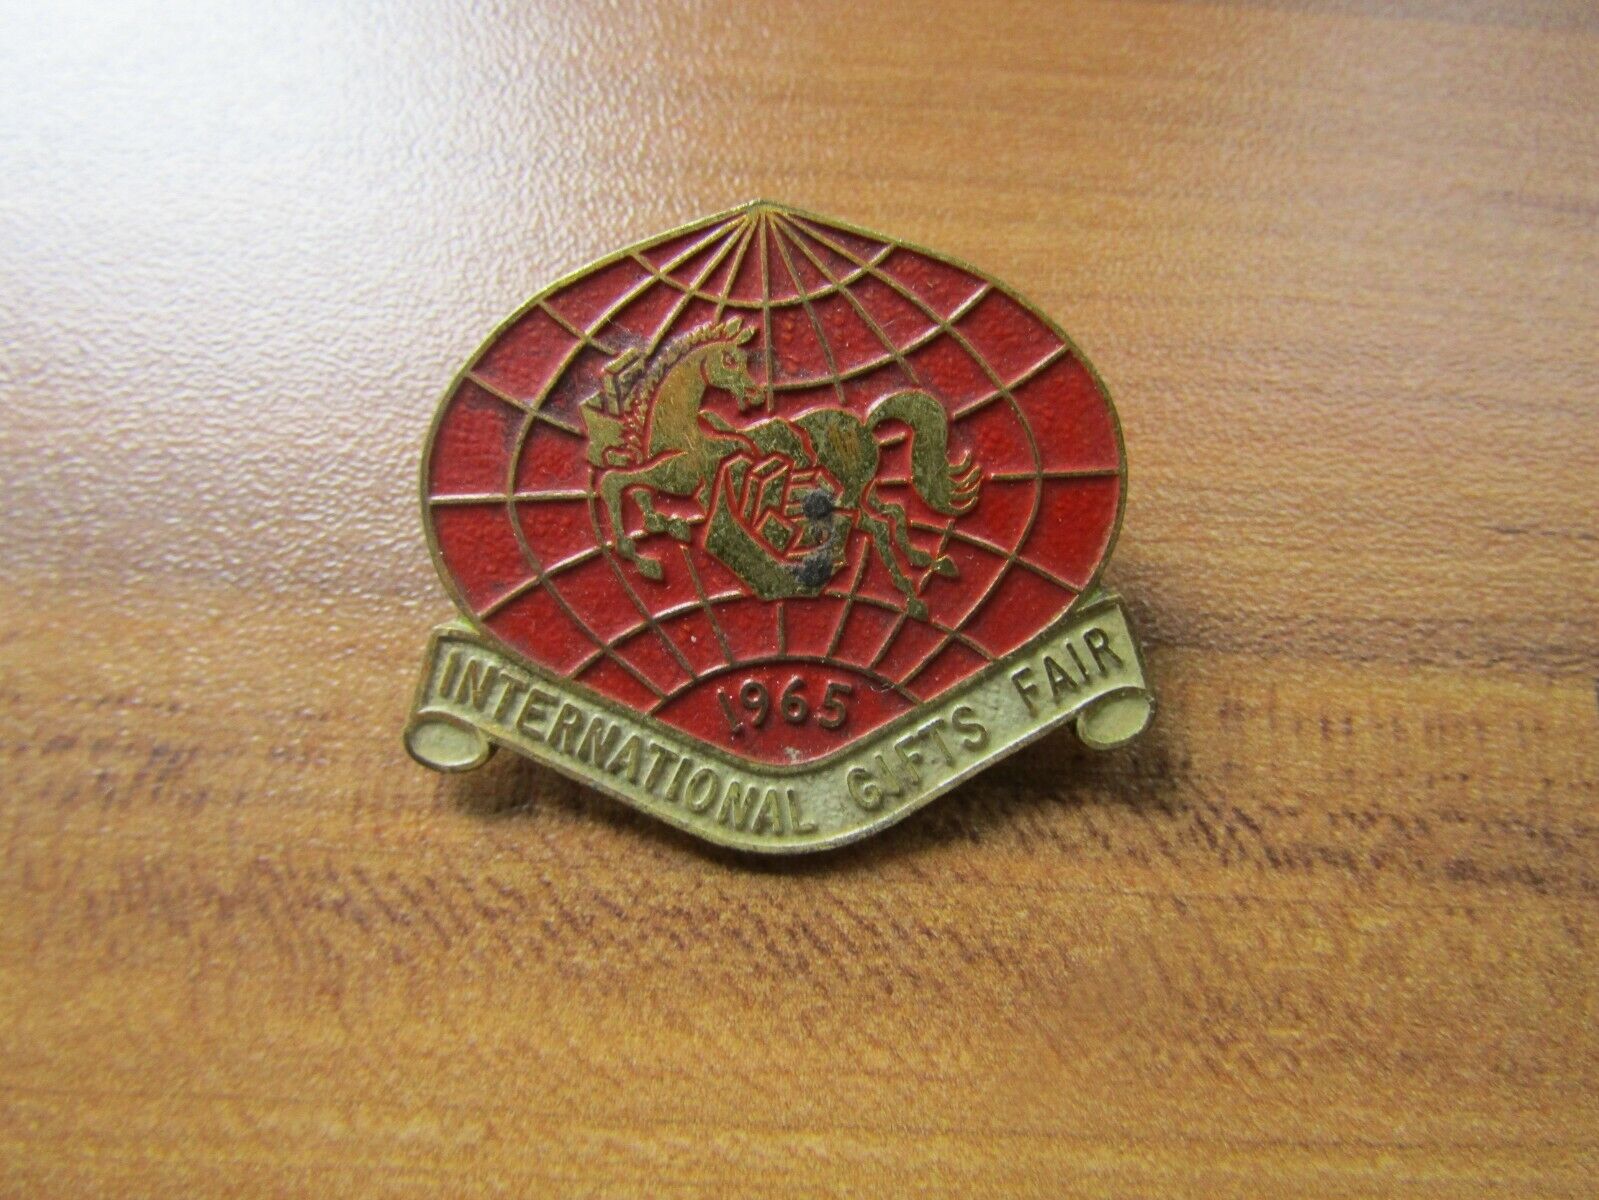 Vintage Enamel pin badge - 1965 - International gifts fair